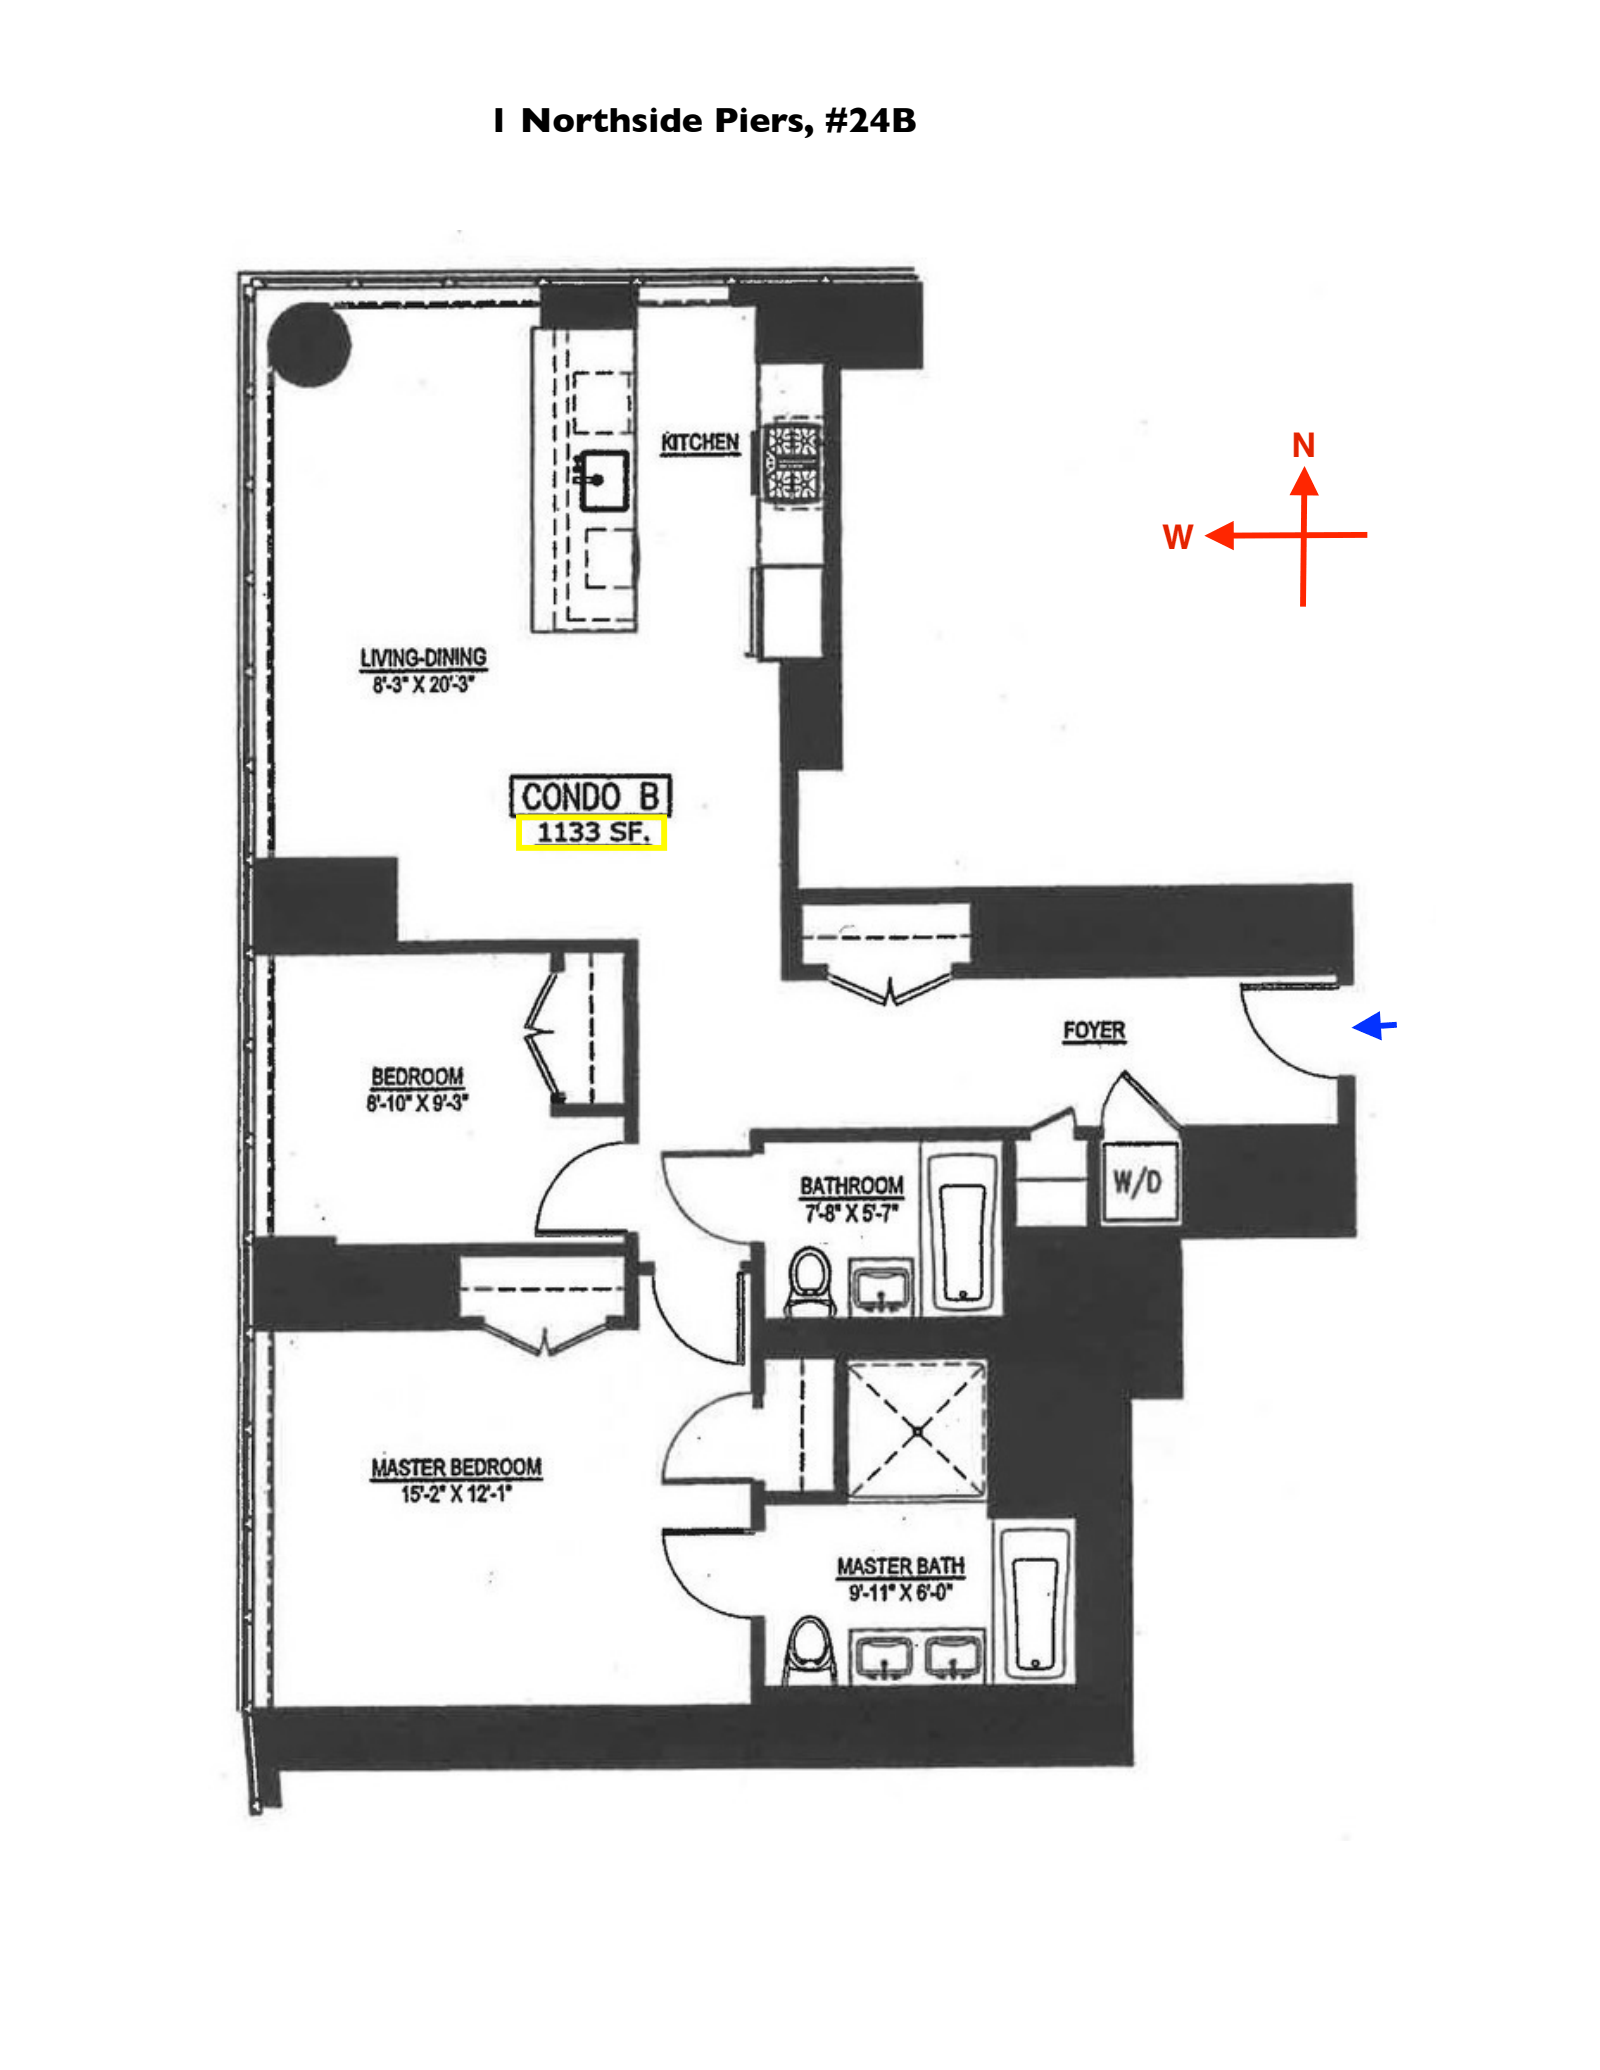 Floorplan for 1 Northside Piers, 24B